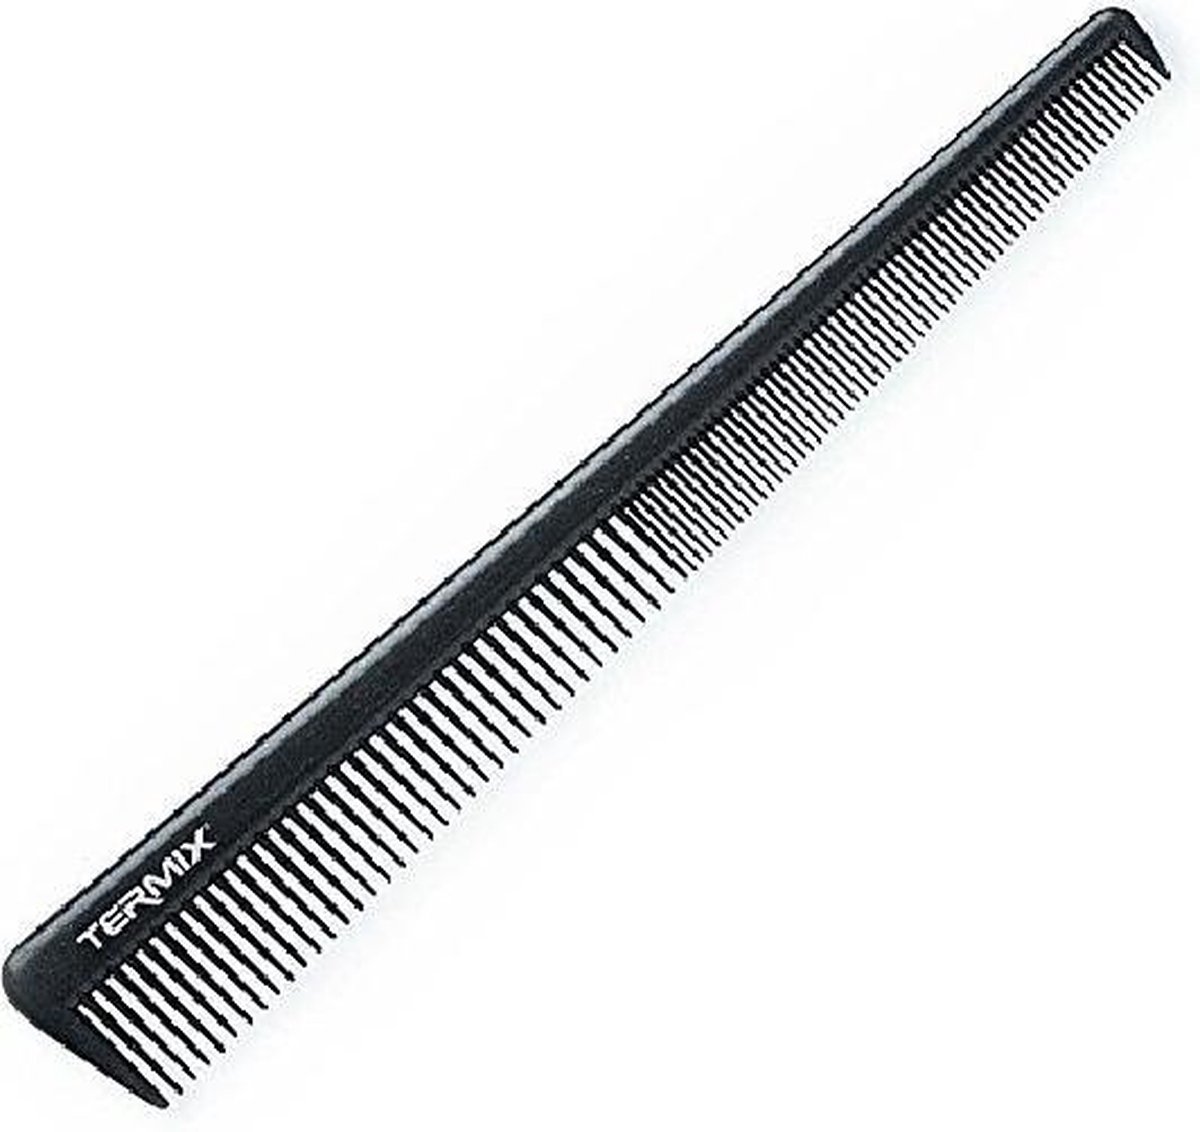 Ayer Termix Comb Prof Titanium 807